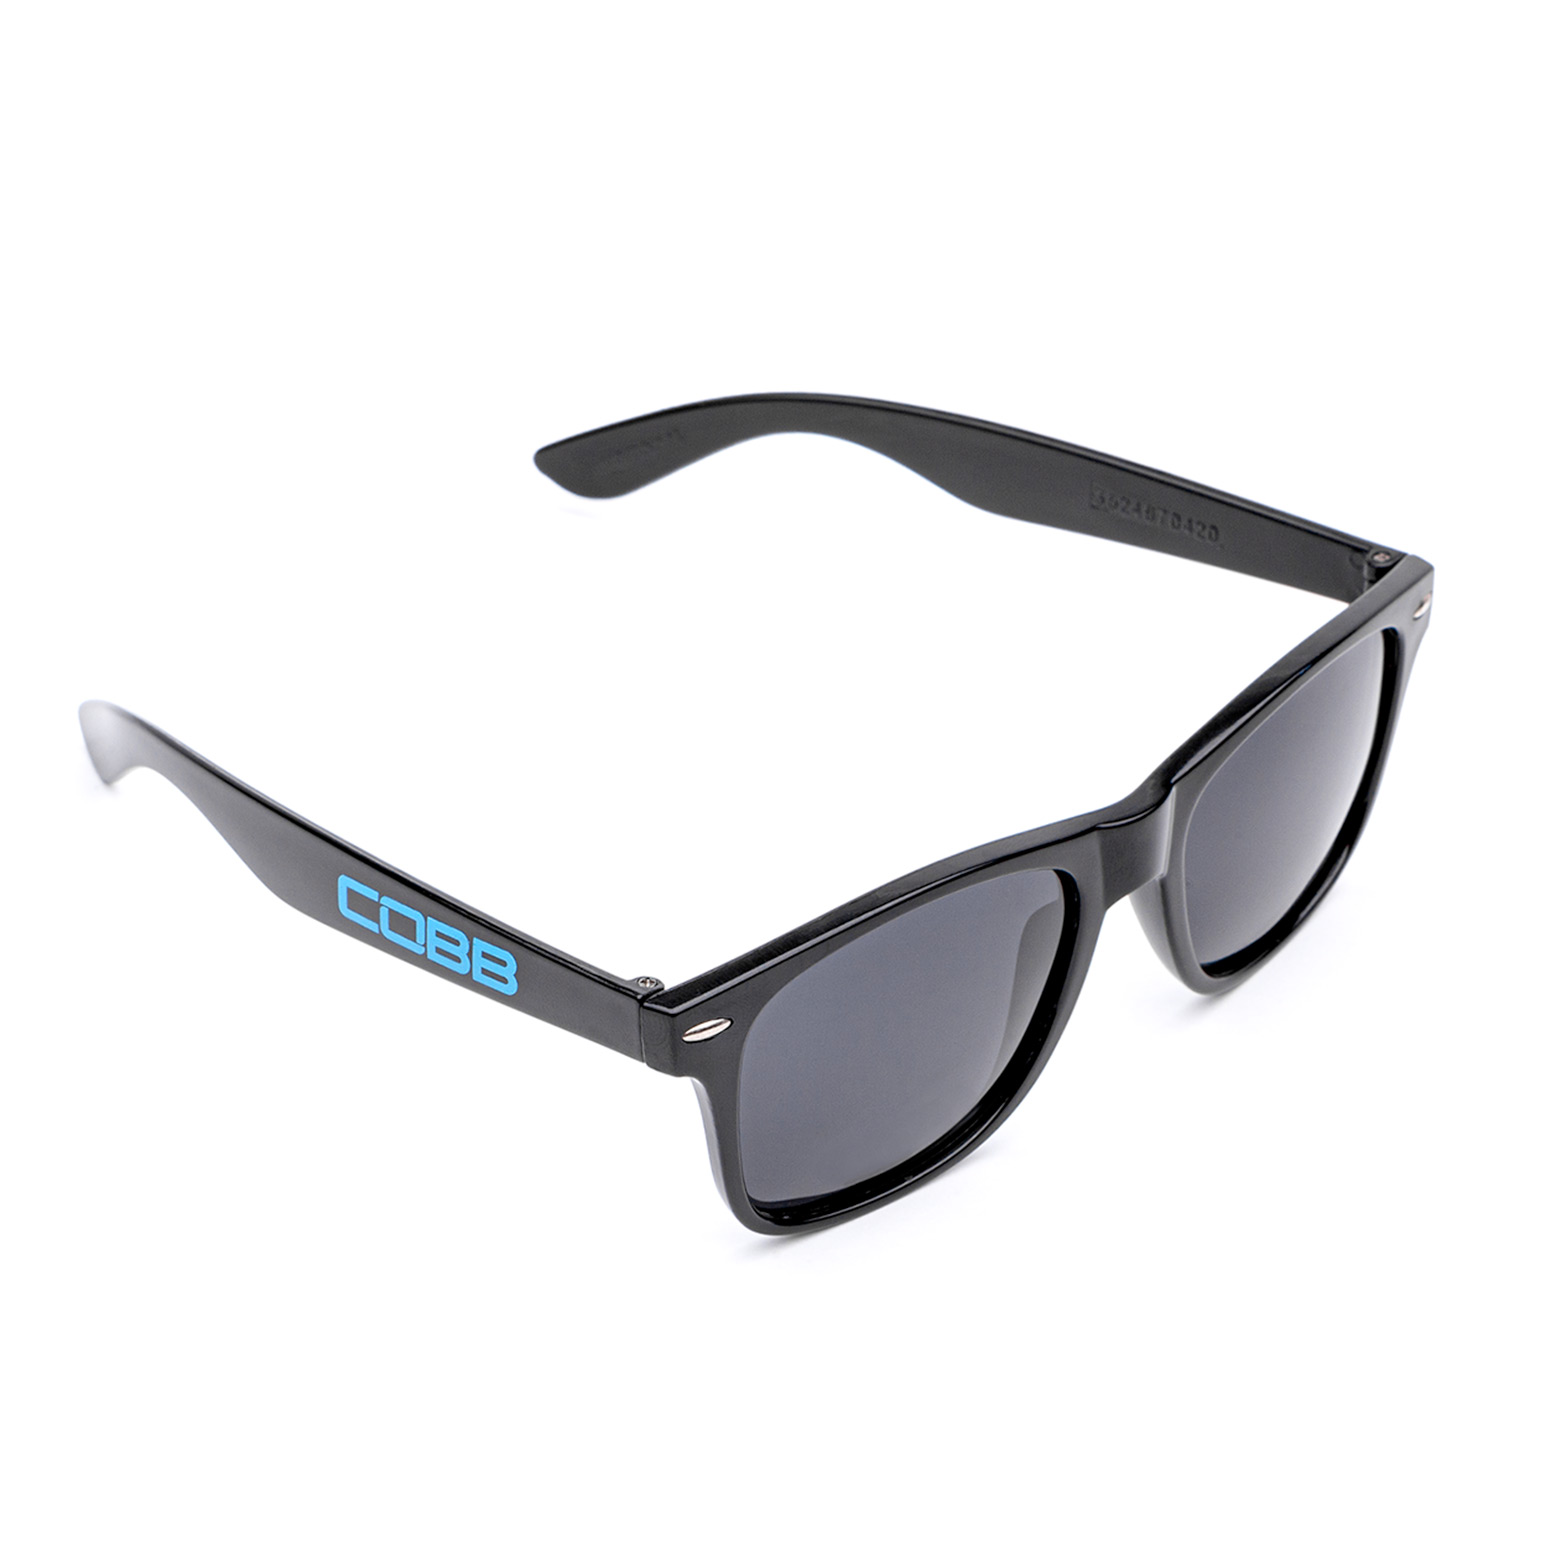 COBB Summer 2021 Sunglasses